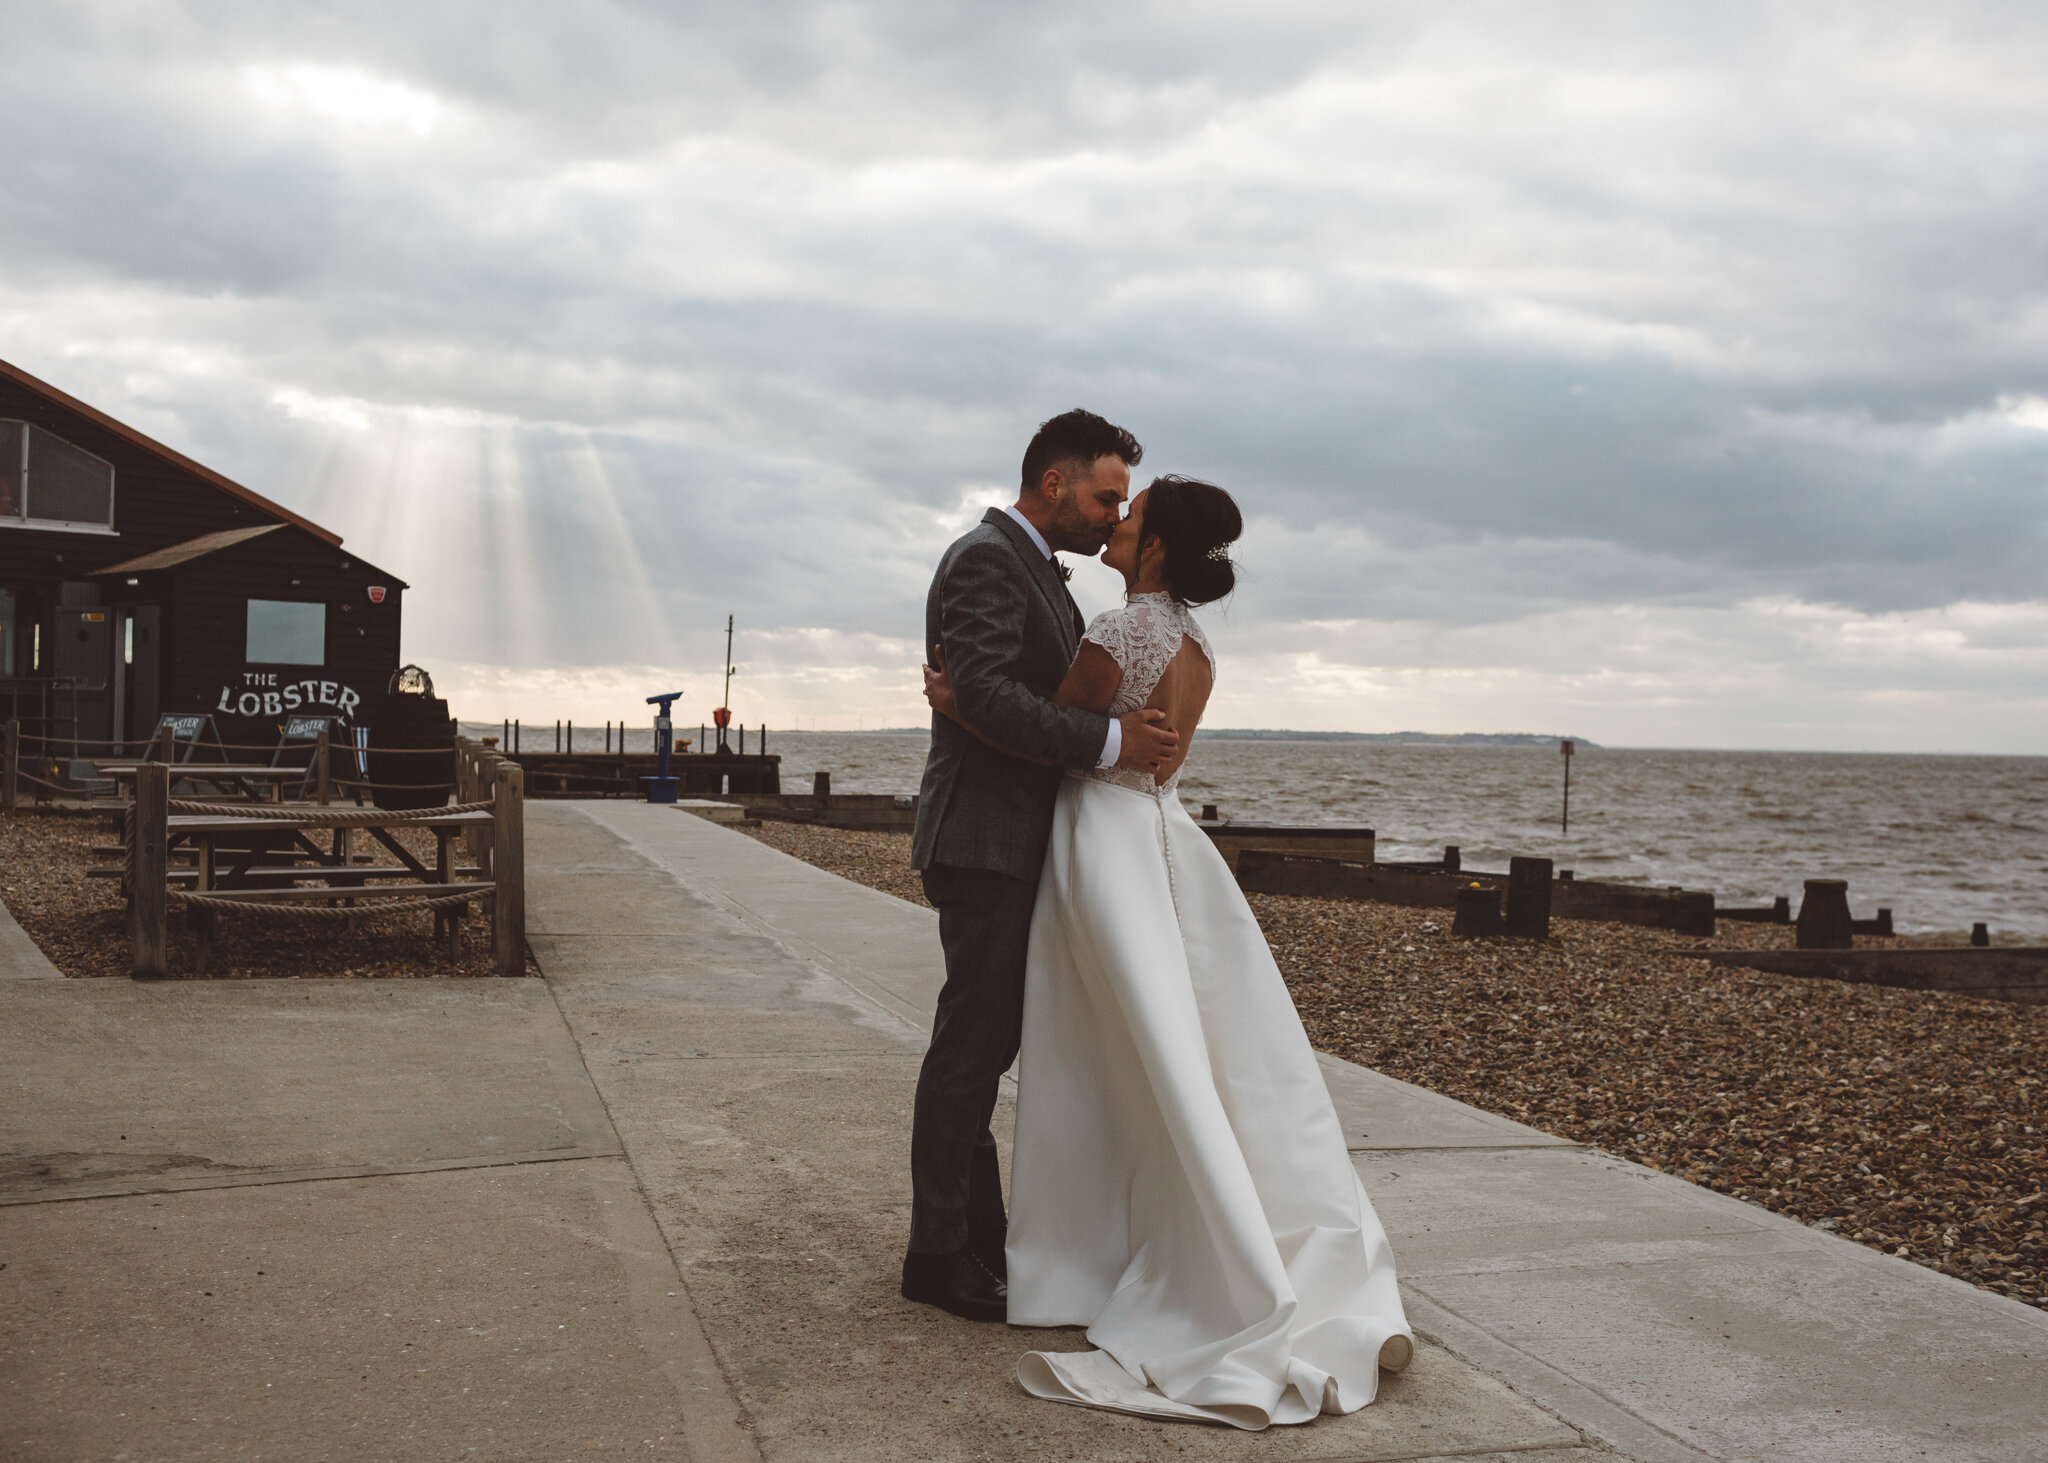 Bev-and-Terry-Windy-Seaside-East-Quay-wedding-154.jpg